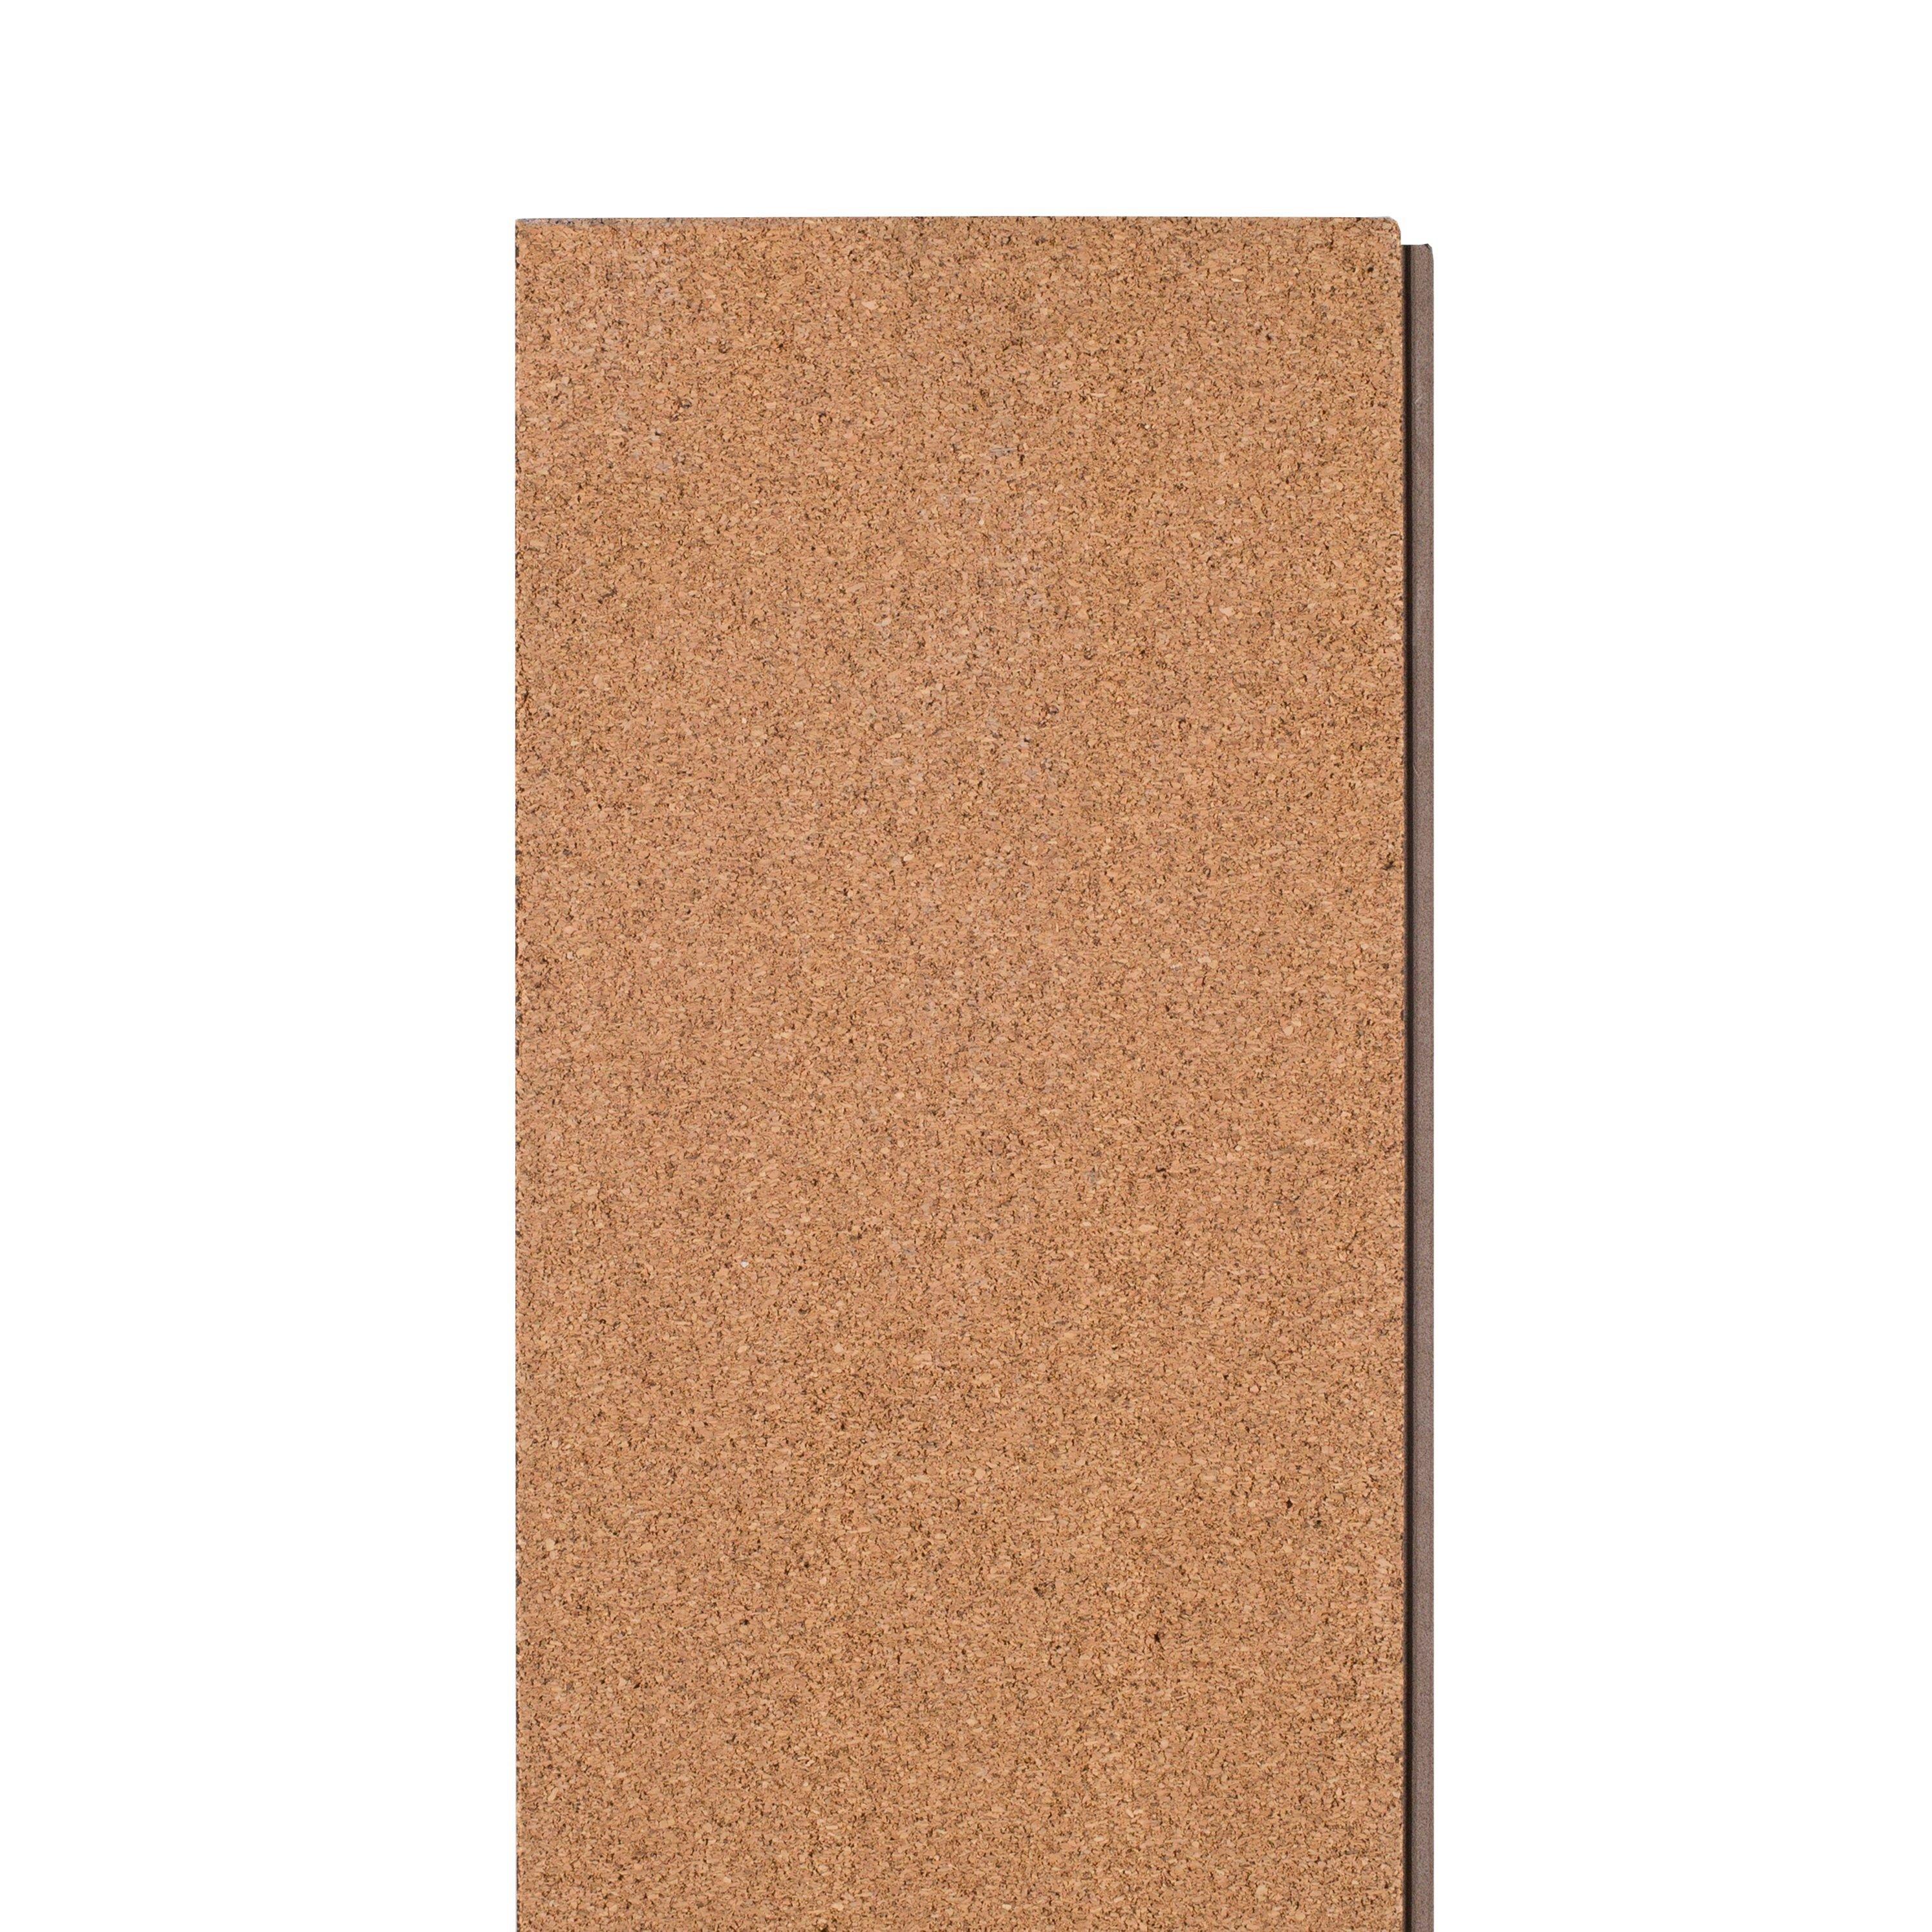 Clove Summit Rigid Core Luxury Vinyl Plank - Cork Back